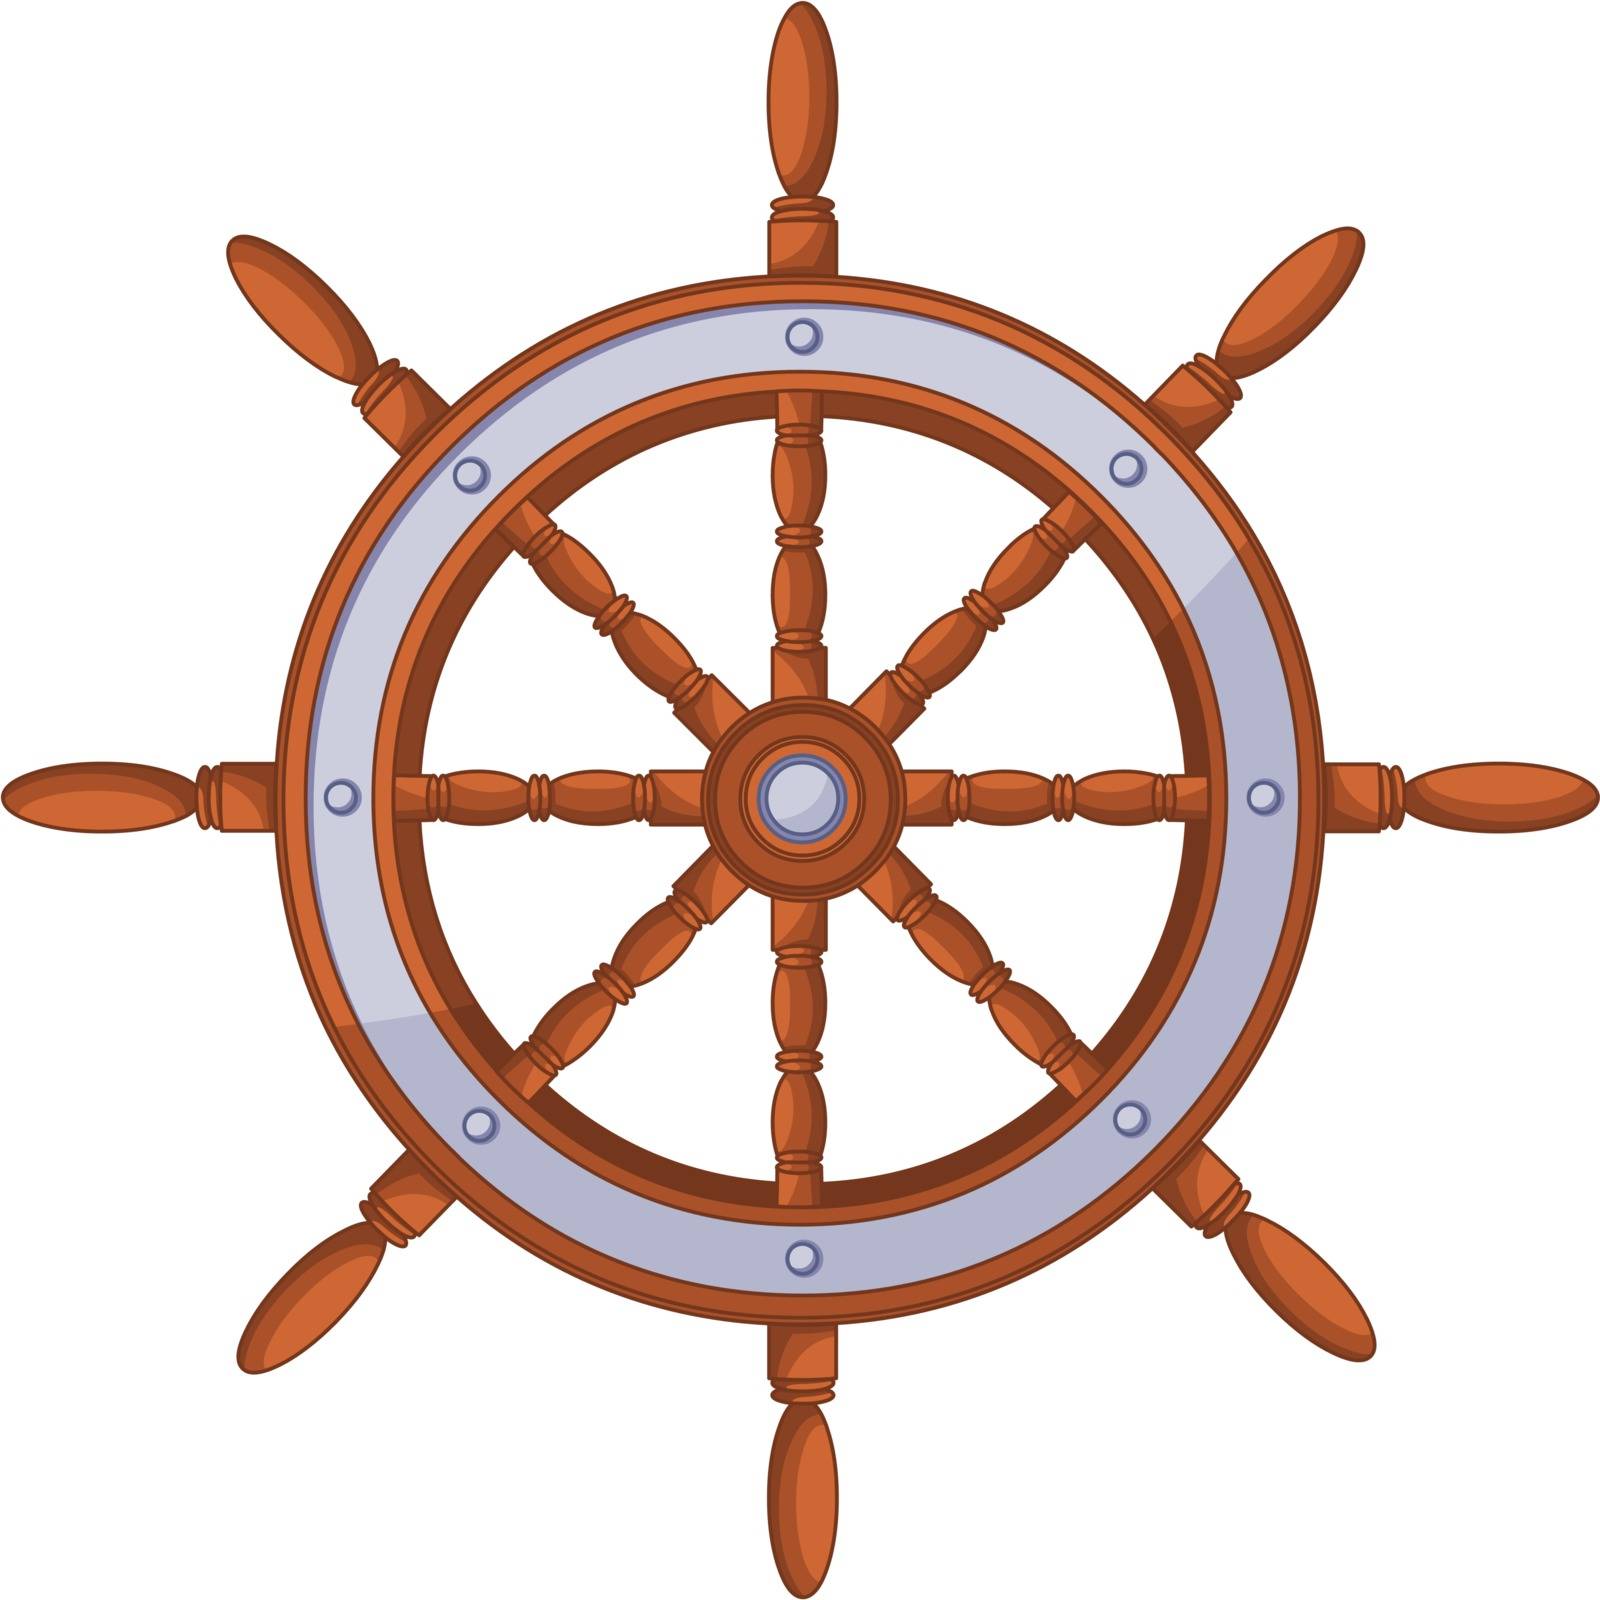 Illustration of ship wood wheel